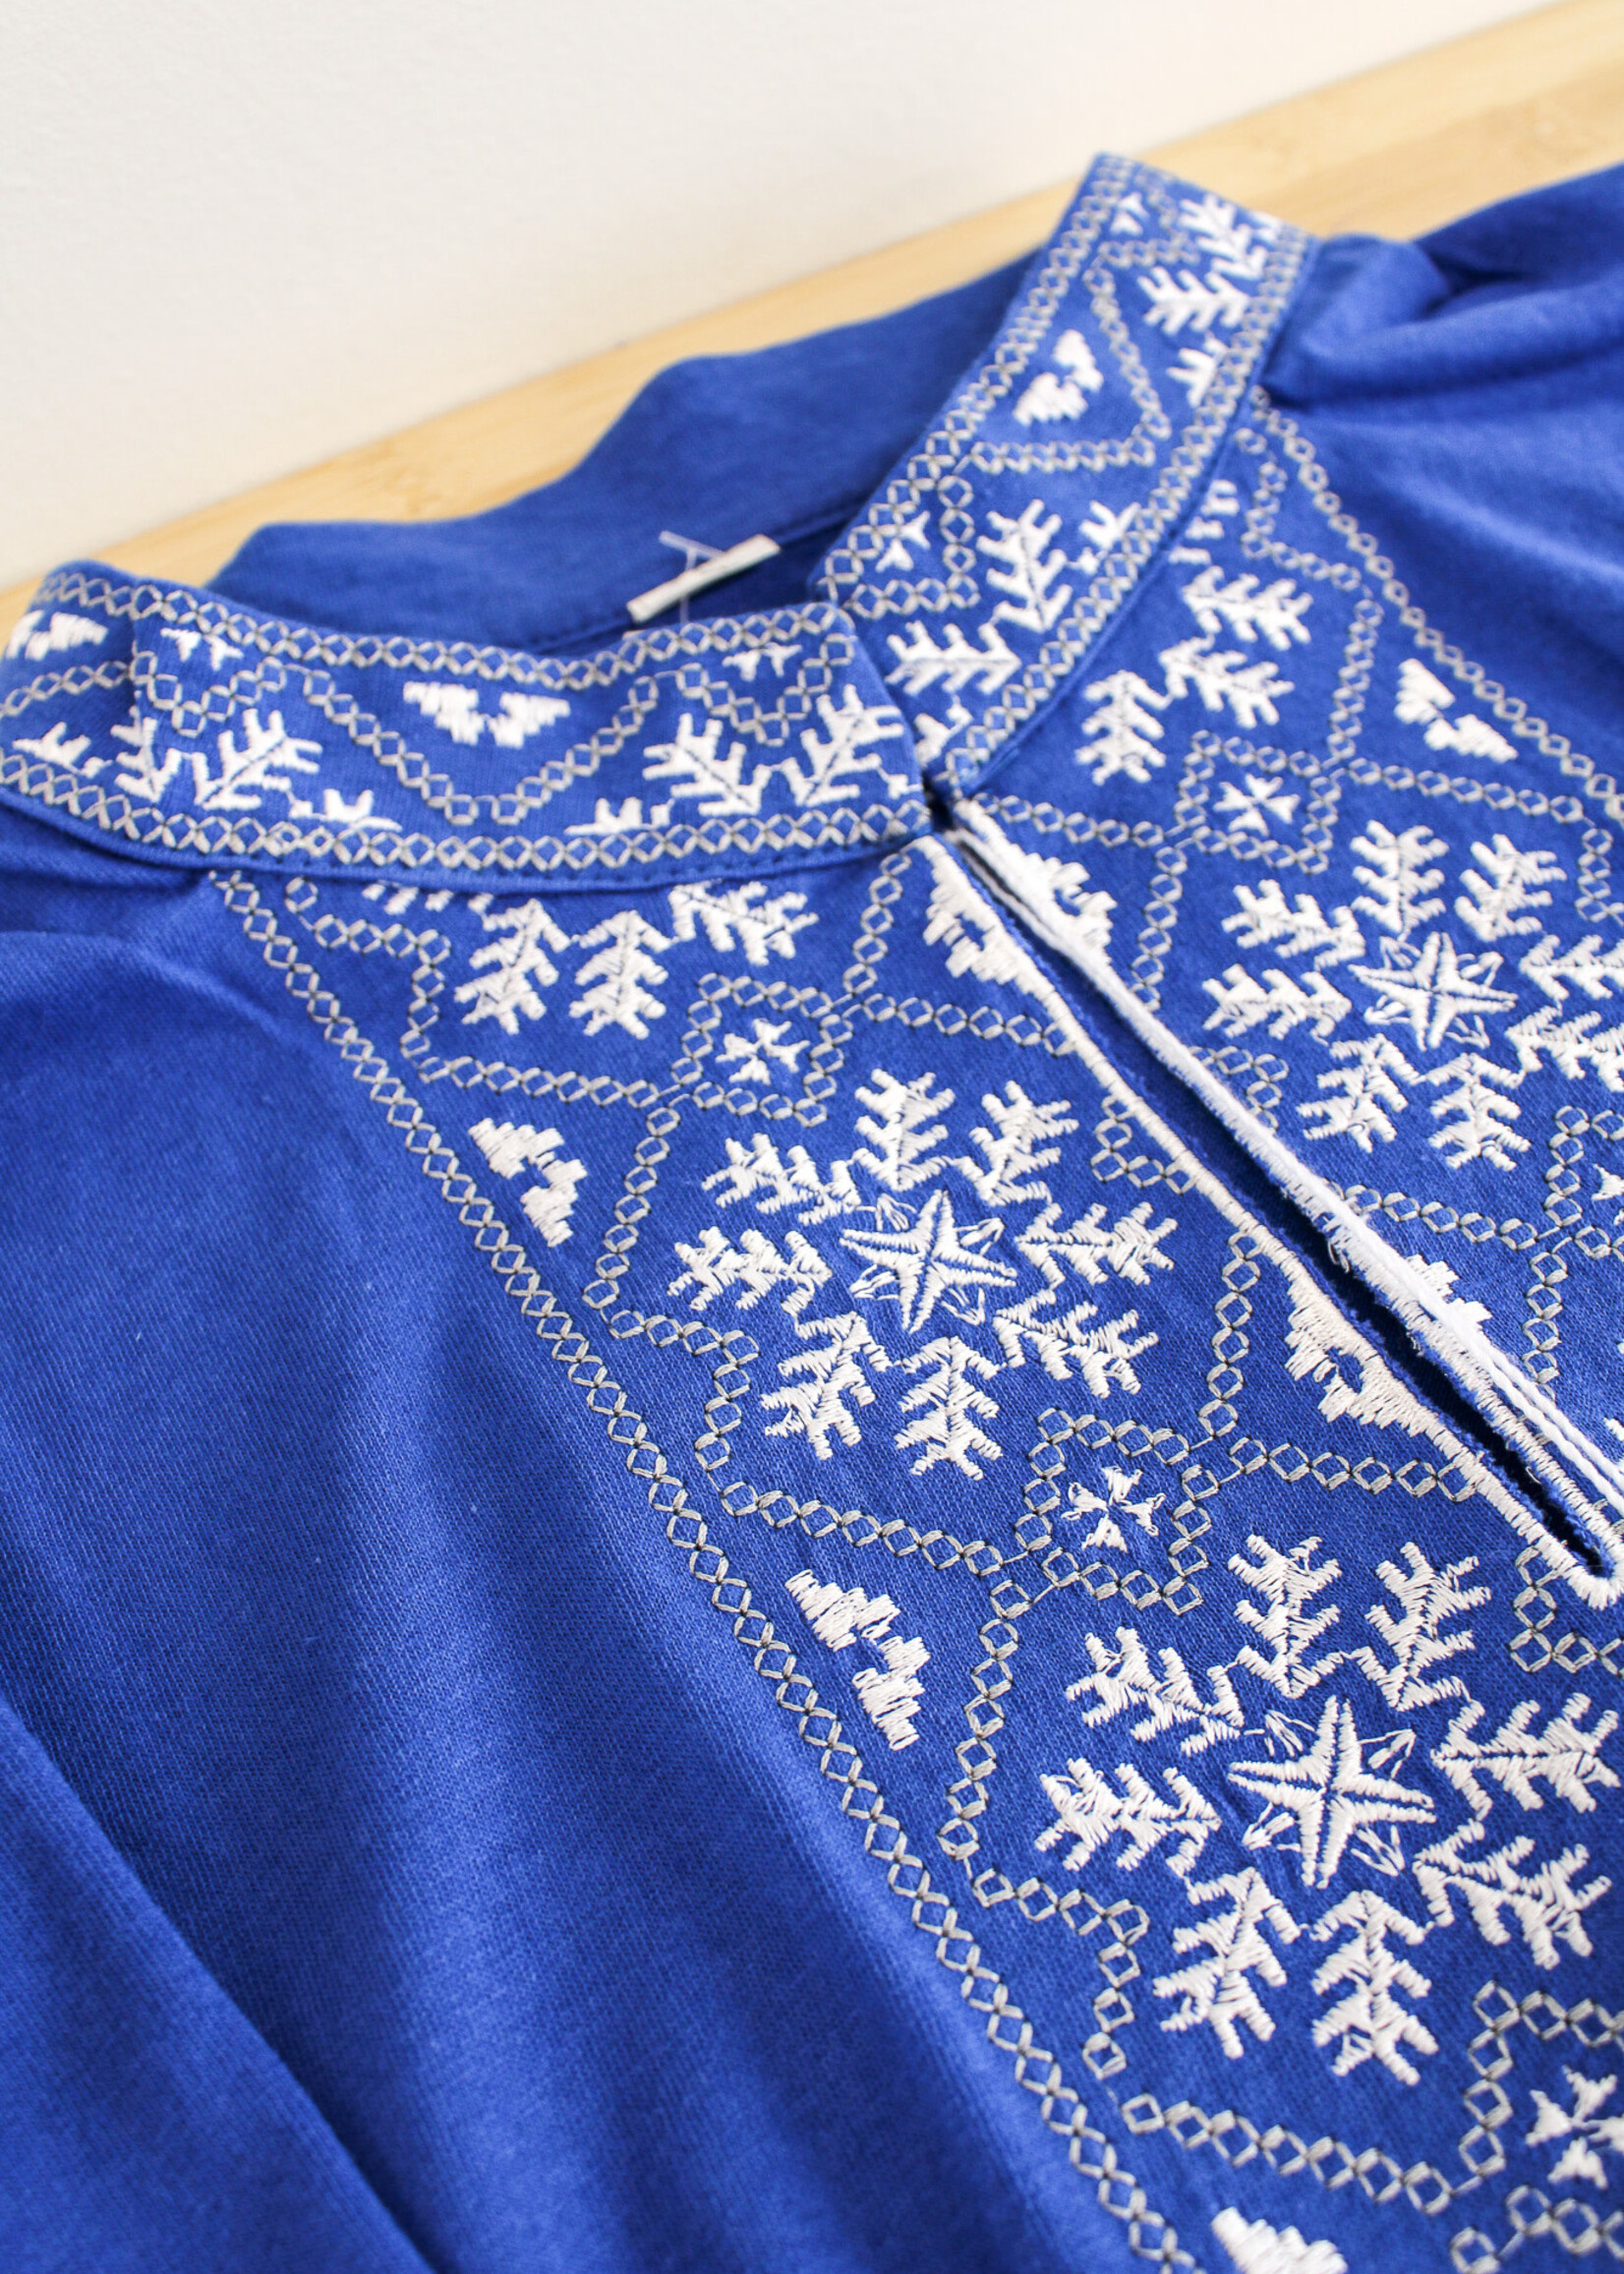 APPAREL - Vyshyvanka (M) - Blue (SizeXL), with white/ grey "Snowflake" embroidery